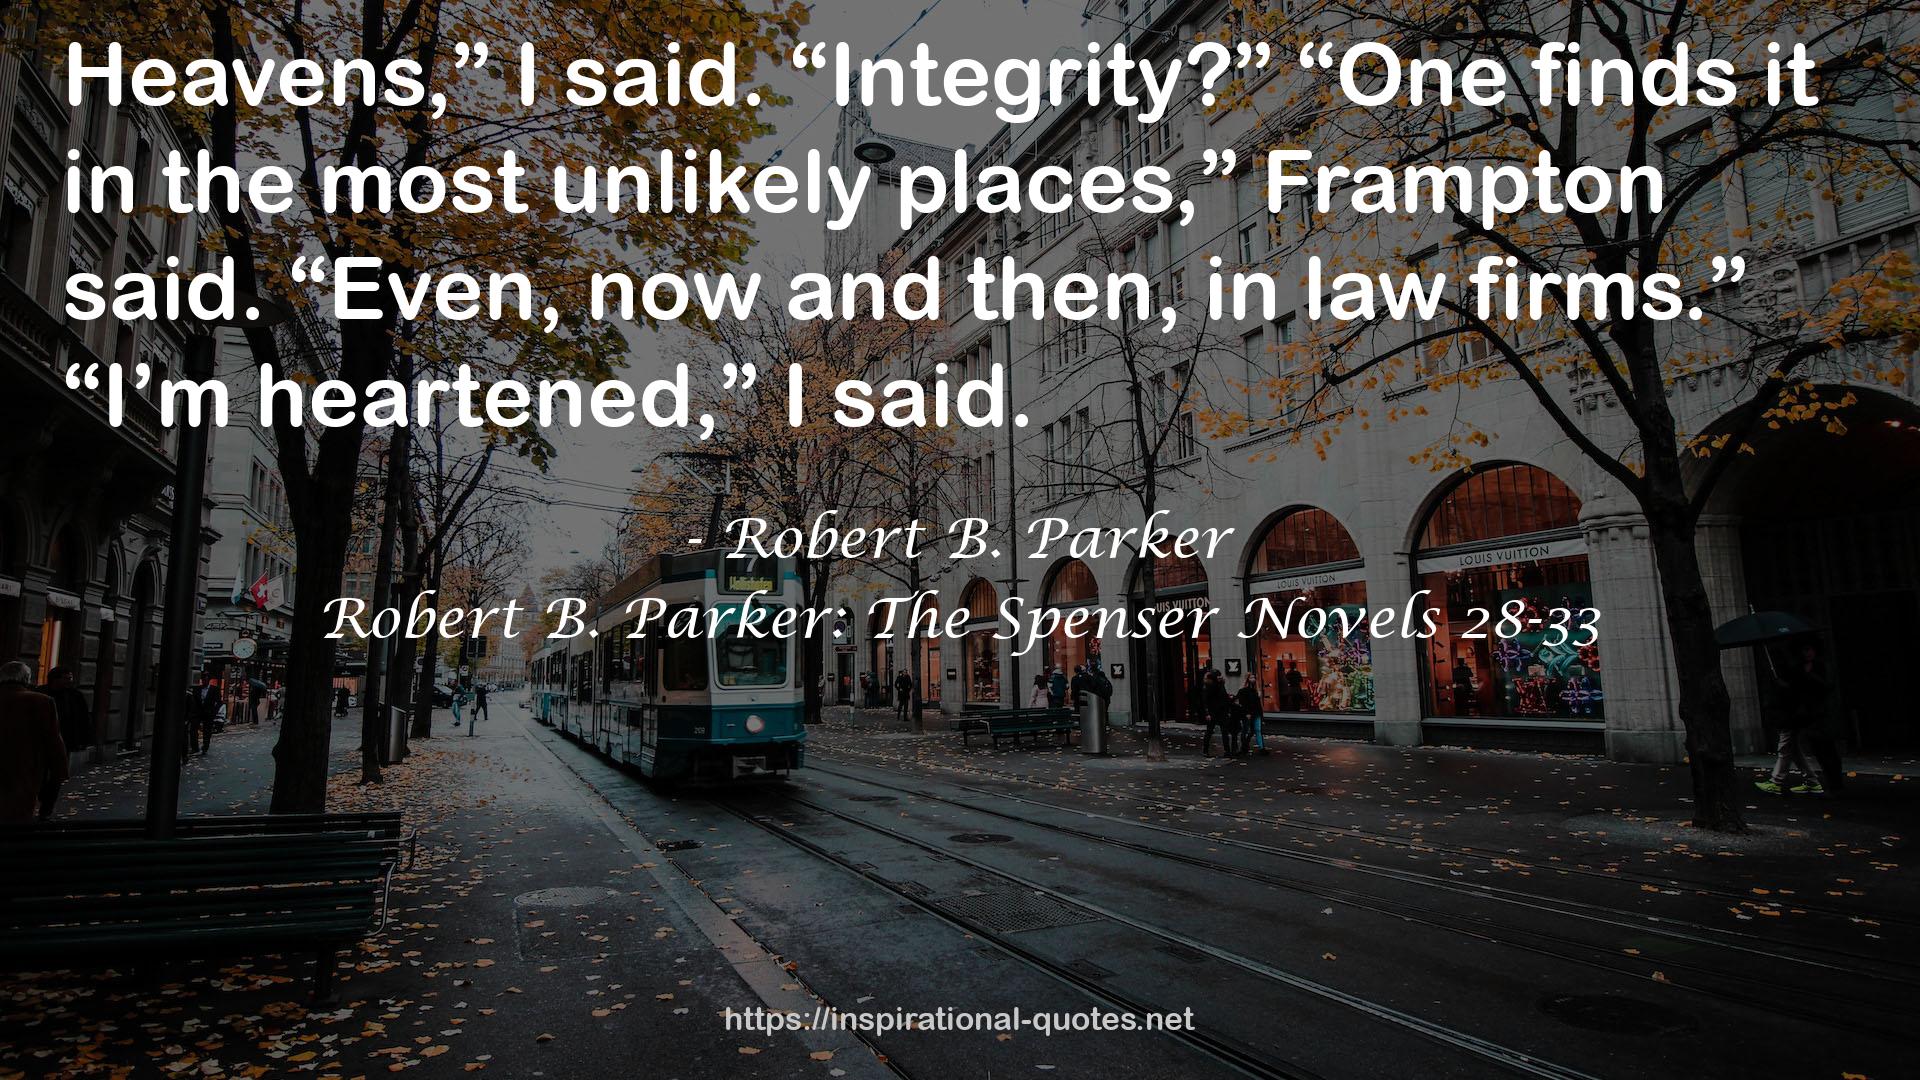 Robert B. Parker: The Spenser Novels 28-33 QUOTES